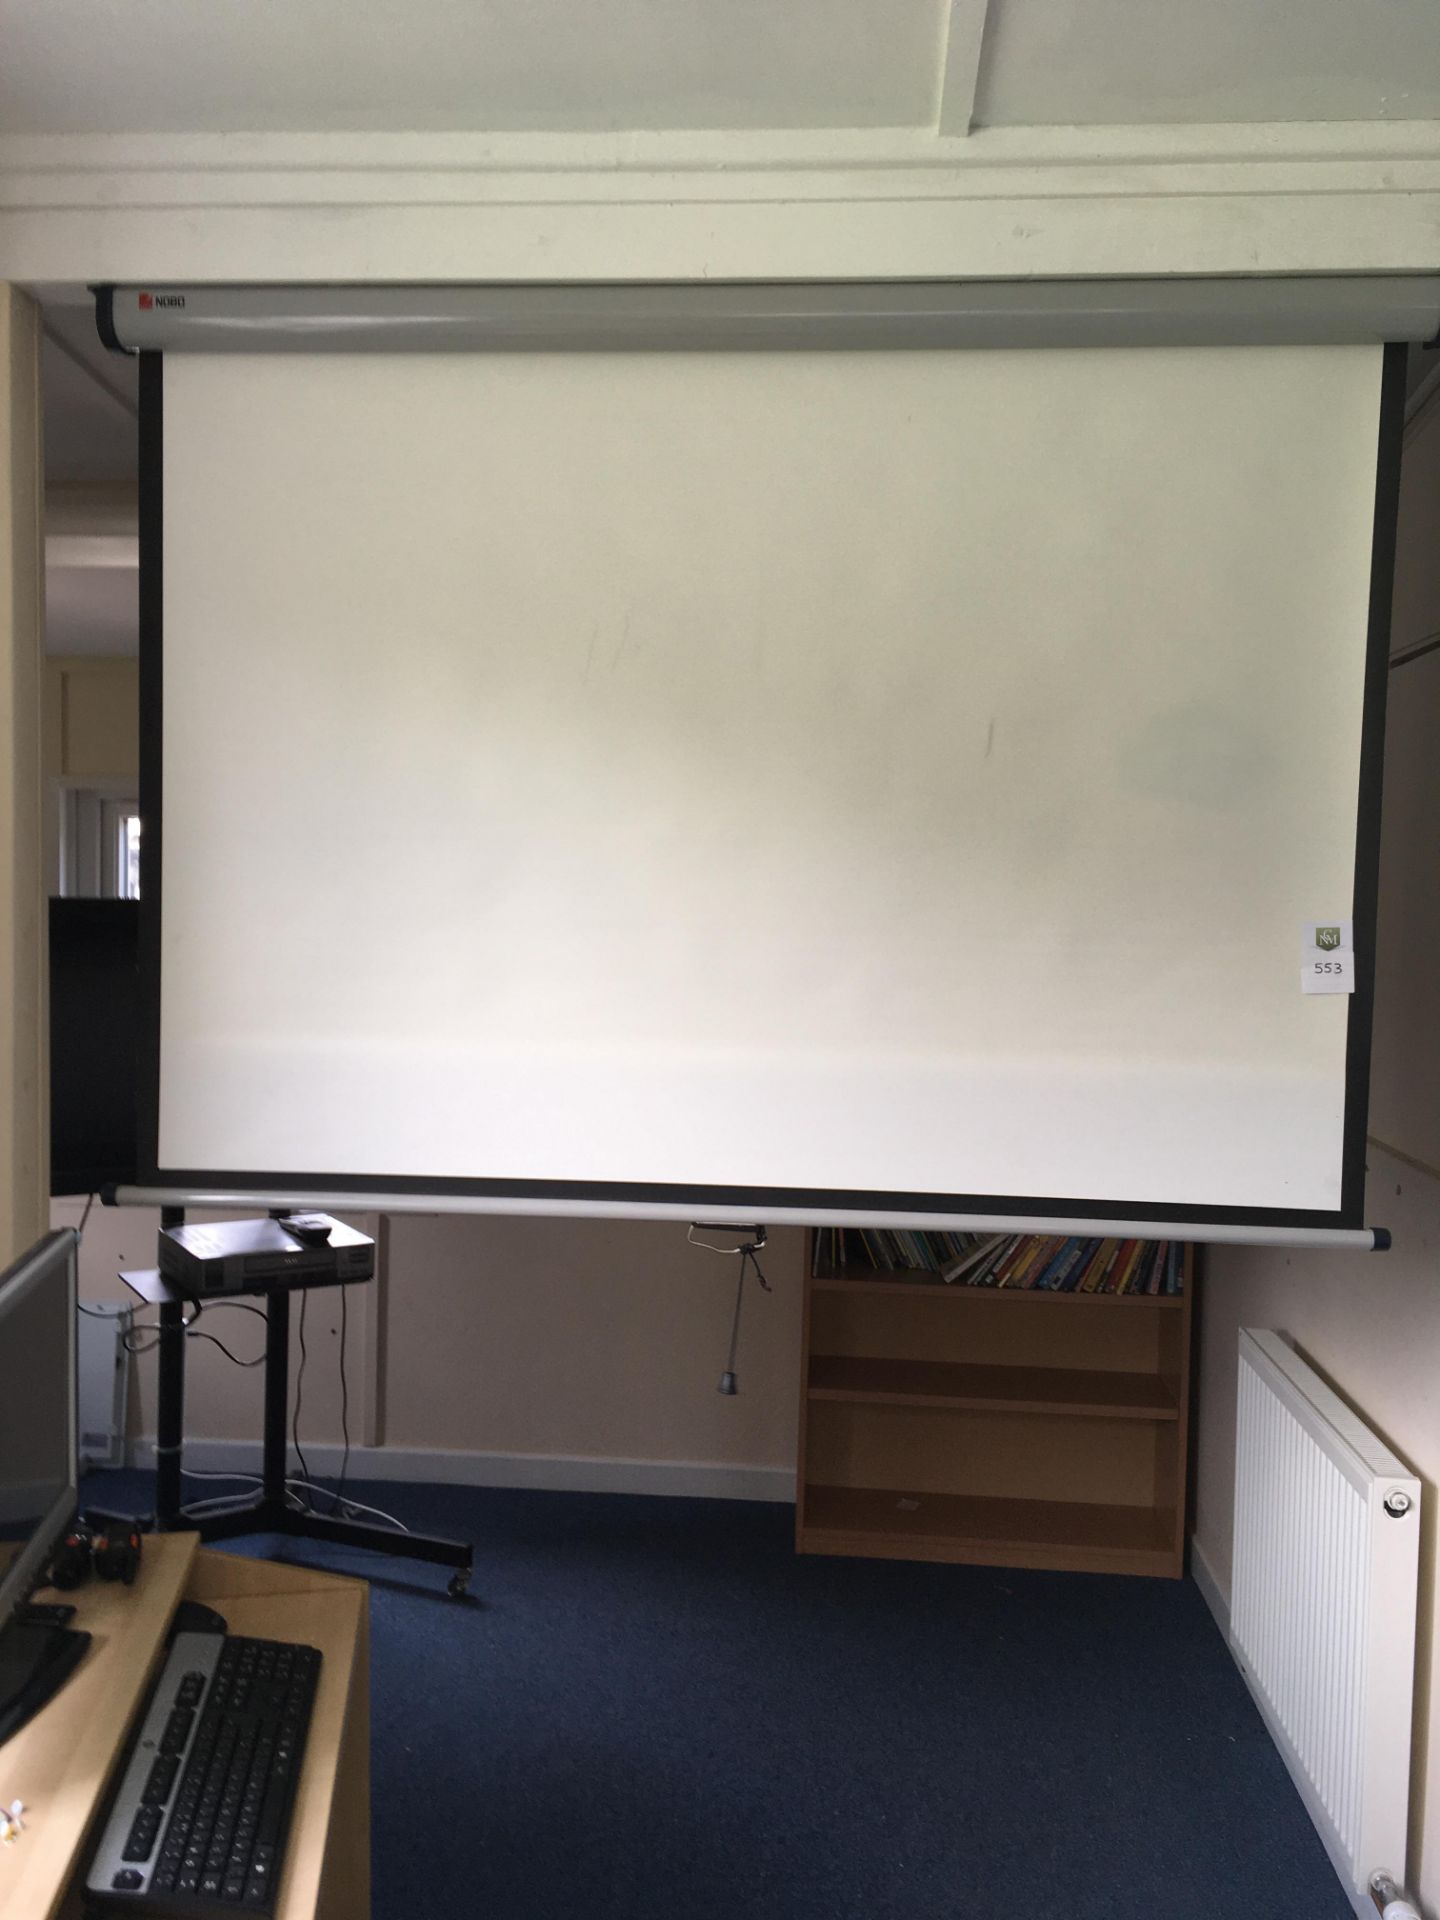 Nobo rollaway projector screen, 1480mm